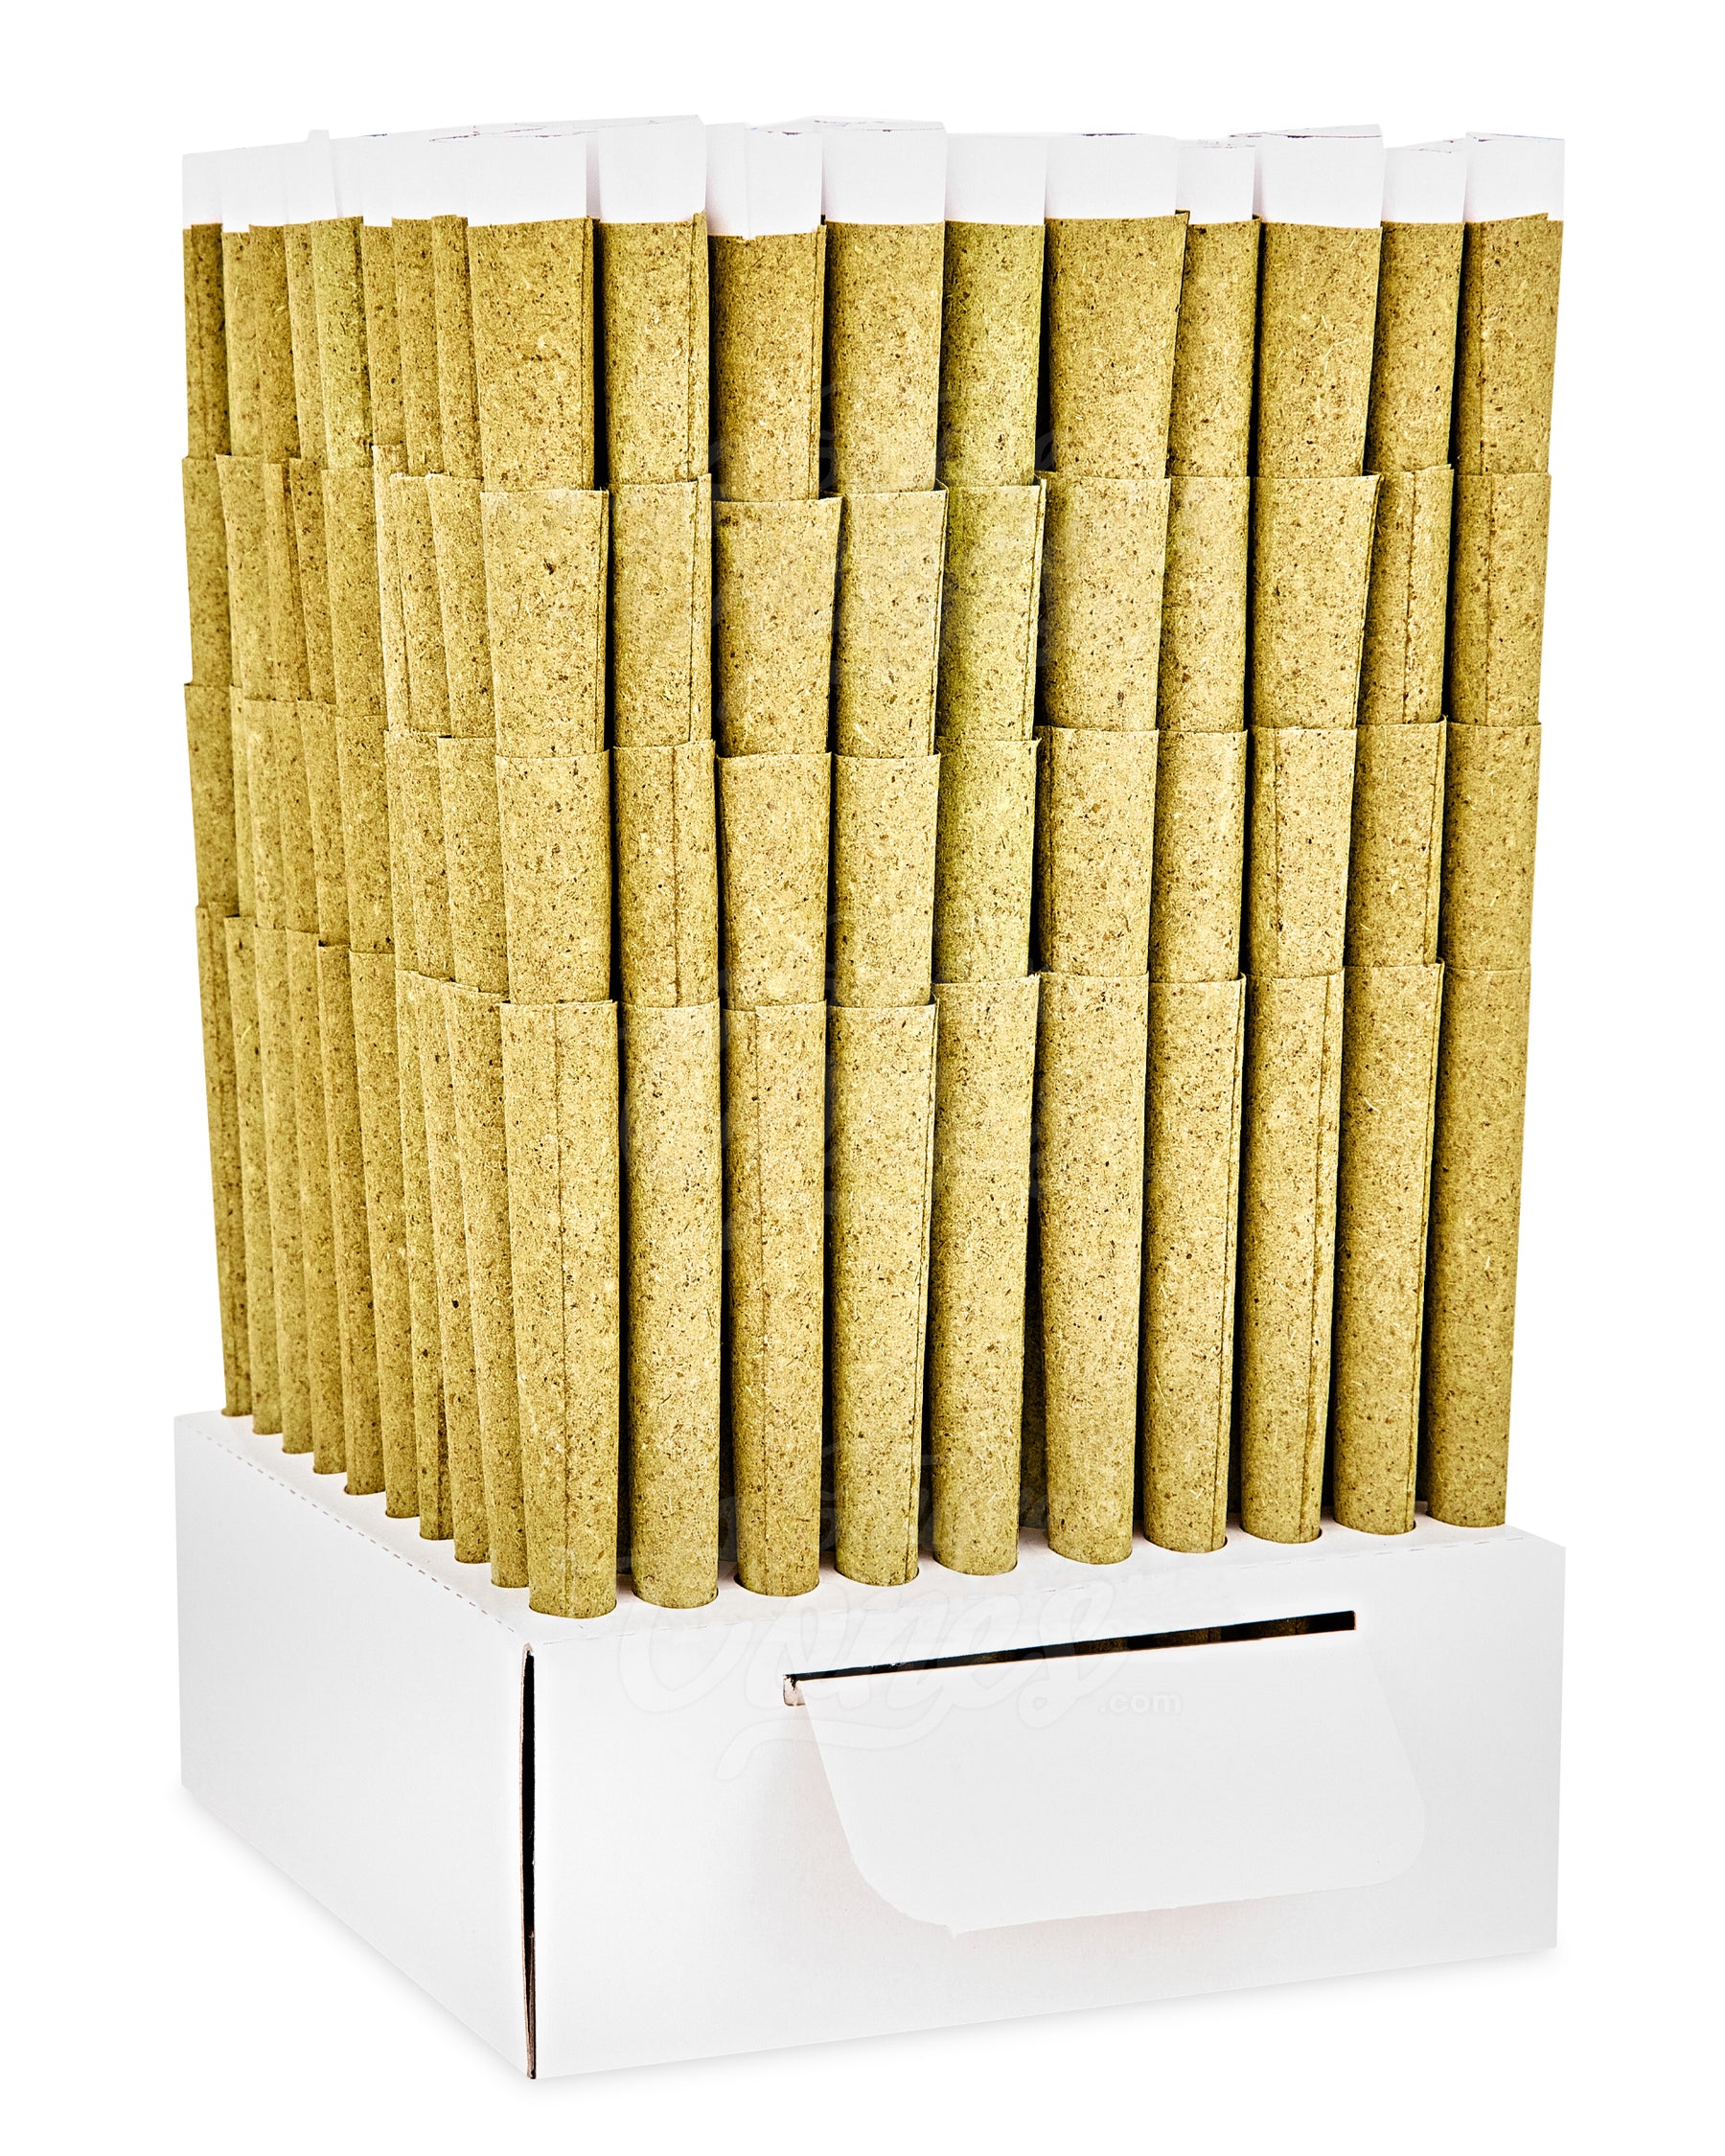 Cones + Supply 84mm 1 1/4 Sized Pre Rolled Organic Hemp Paper Cones 900/Box